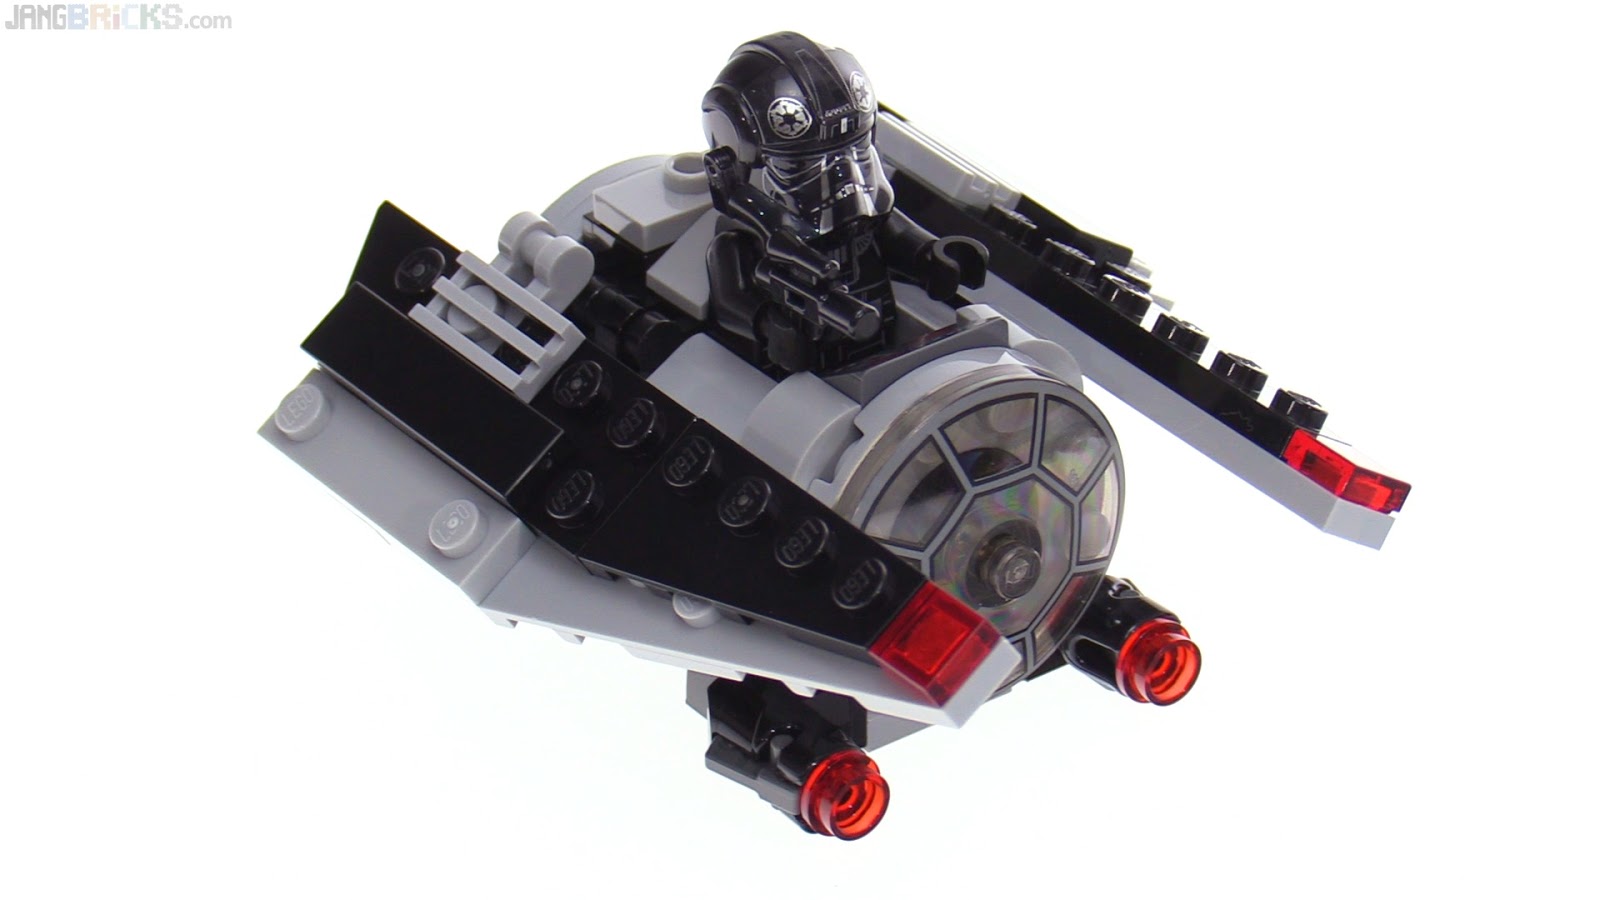 LEGO Wars Microfighters TIE Striker review! 75161